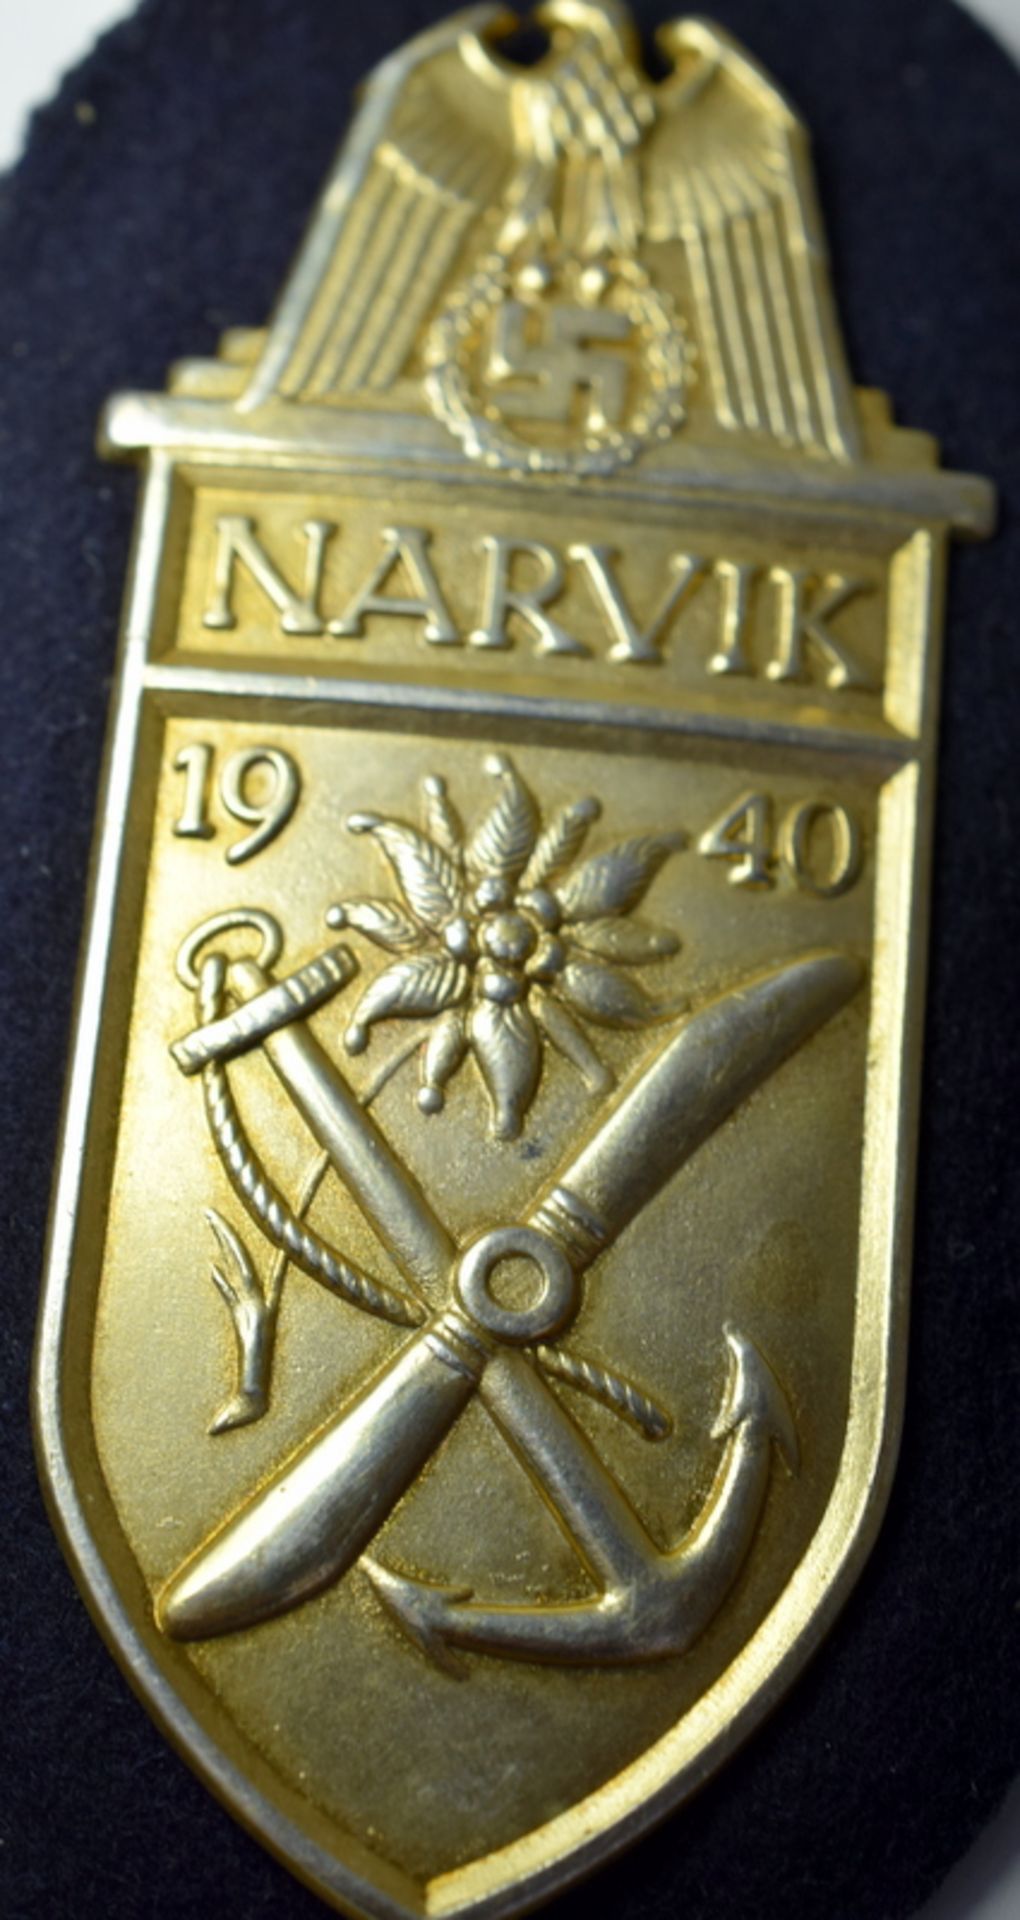 German Narvik Shield Badge On Cloth Background - Image 2 of 4